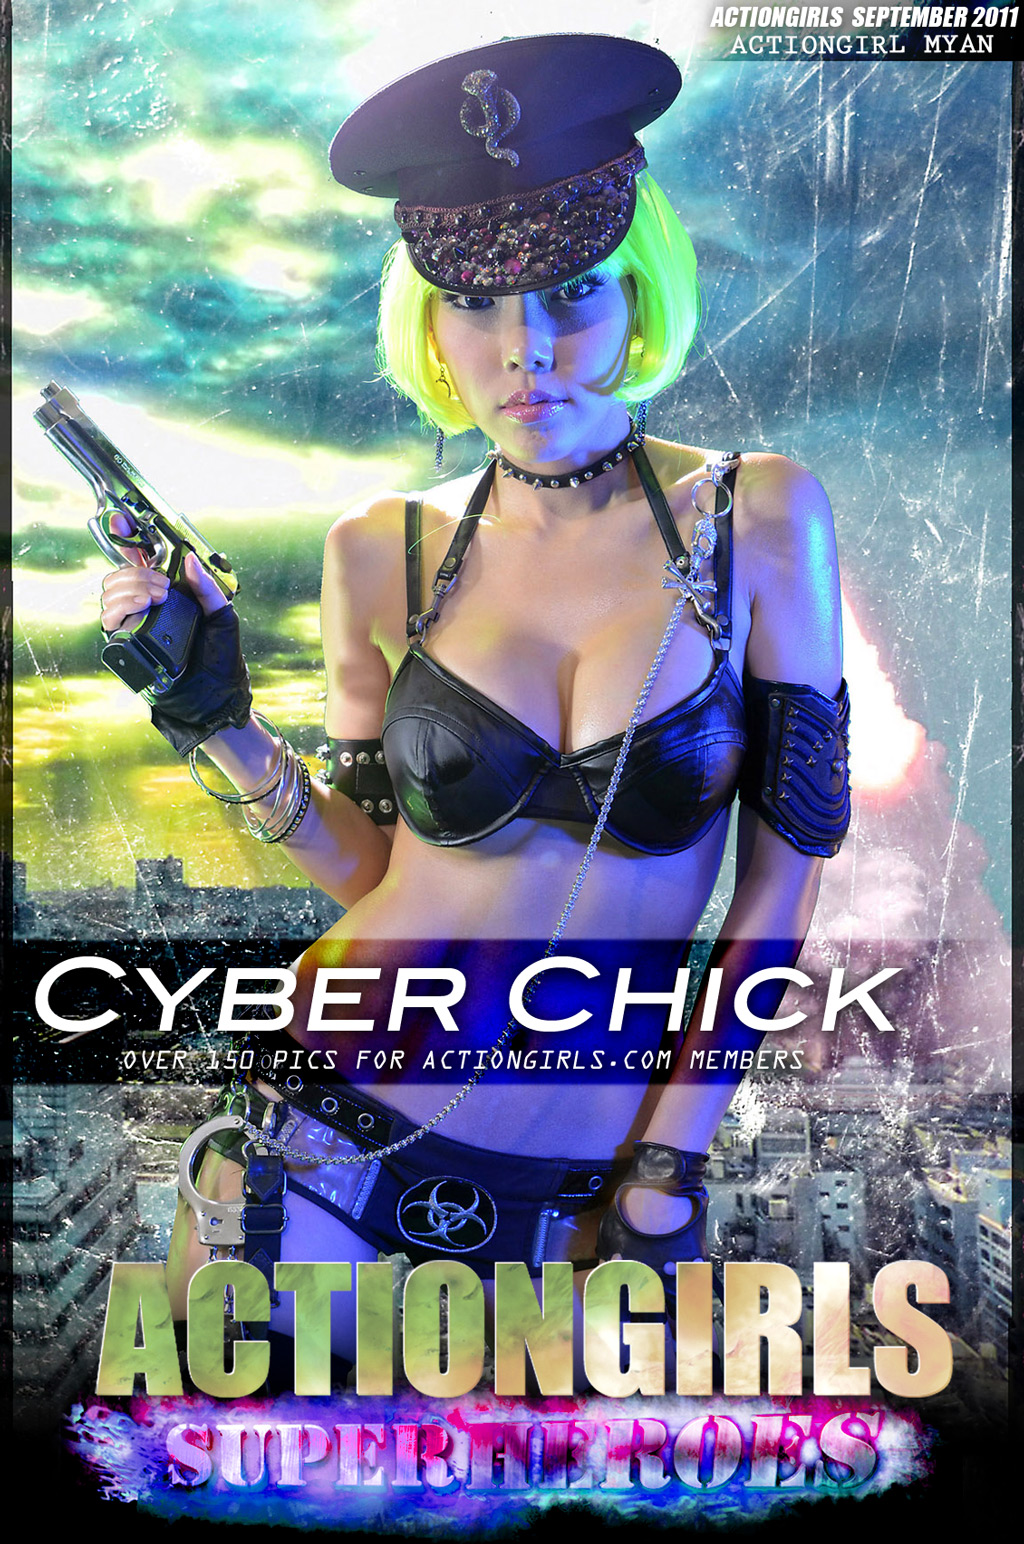 Mayan Cyber Chick